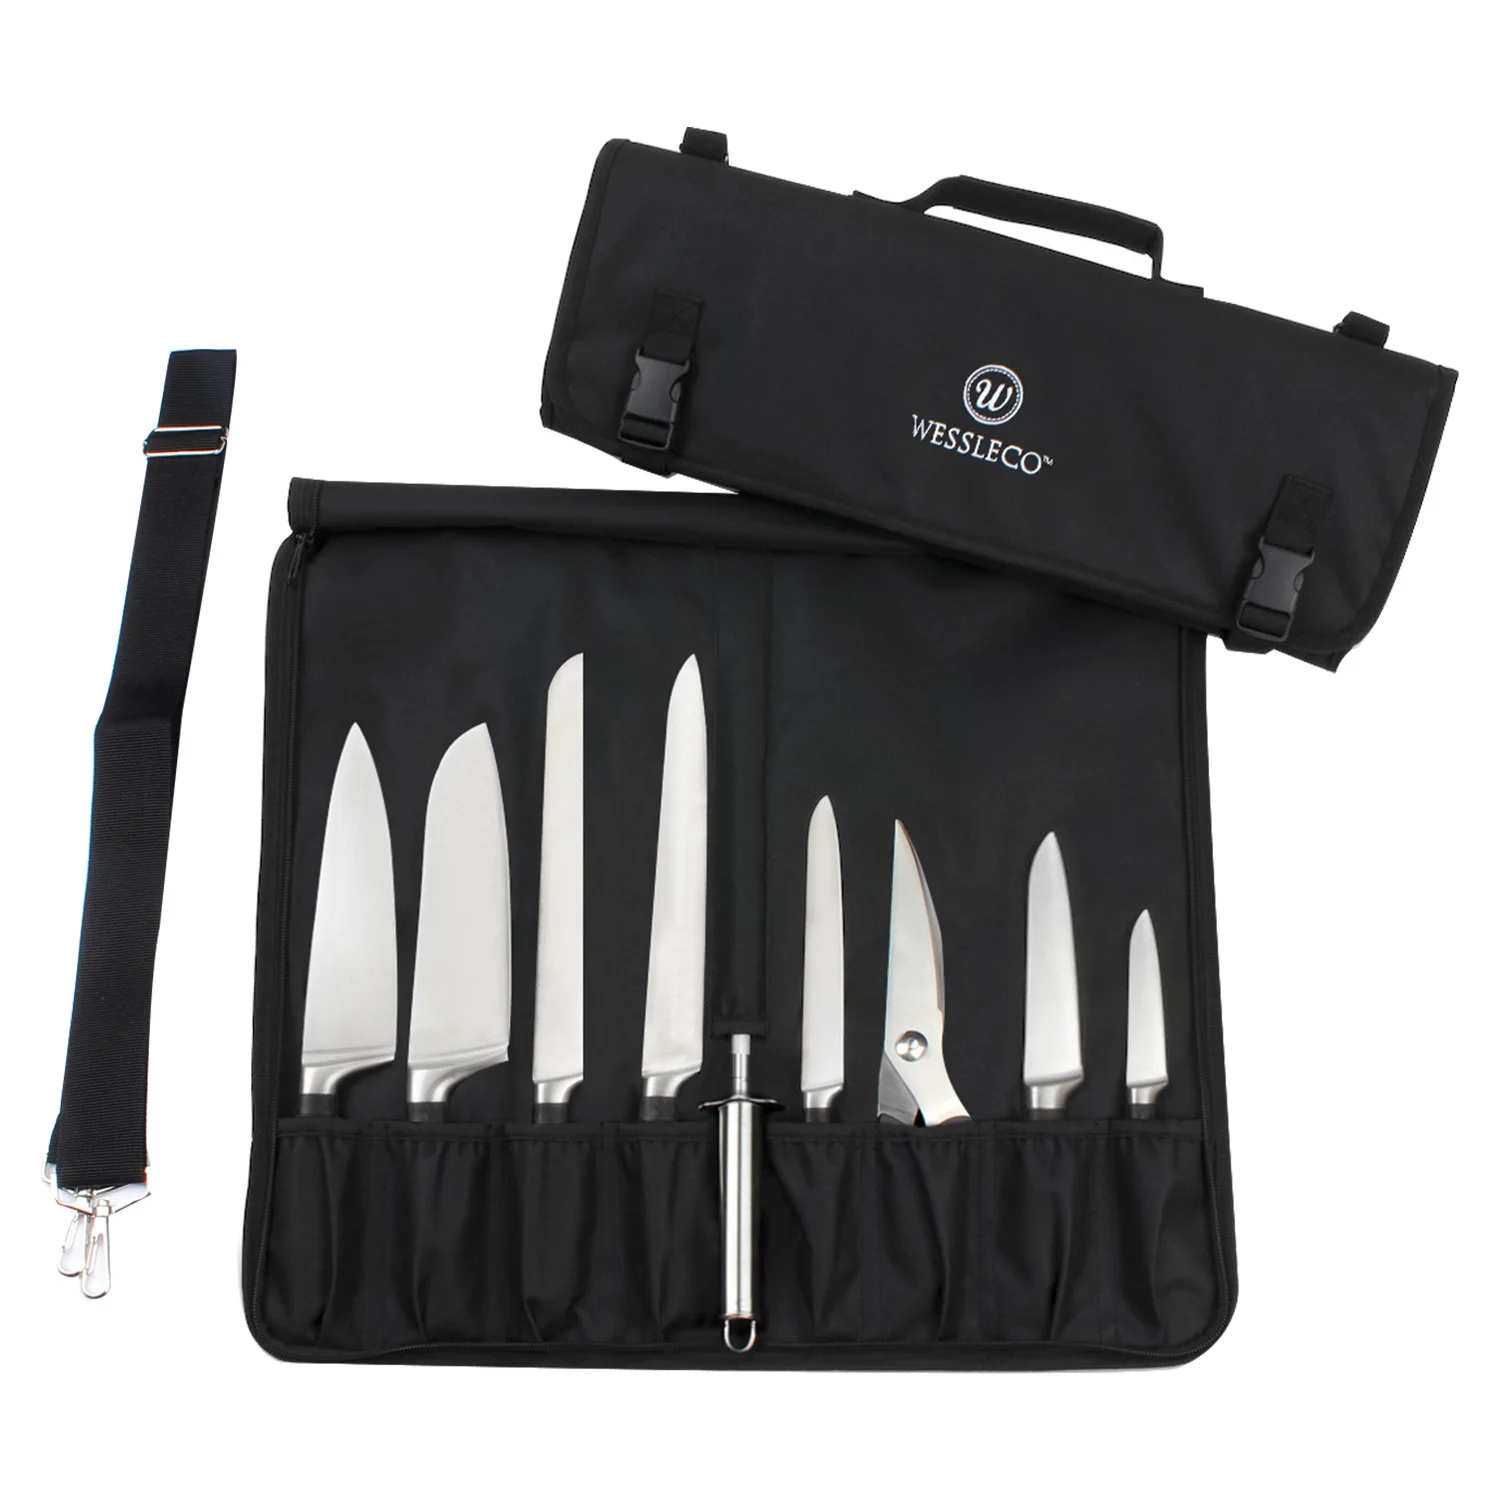 

Wessleco Chef Knife Bag Nylon Roll Bag with 8 Pocket for Kitchen Accessories Portable Knifes Case Holder Custom, Black